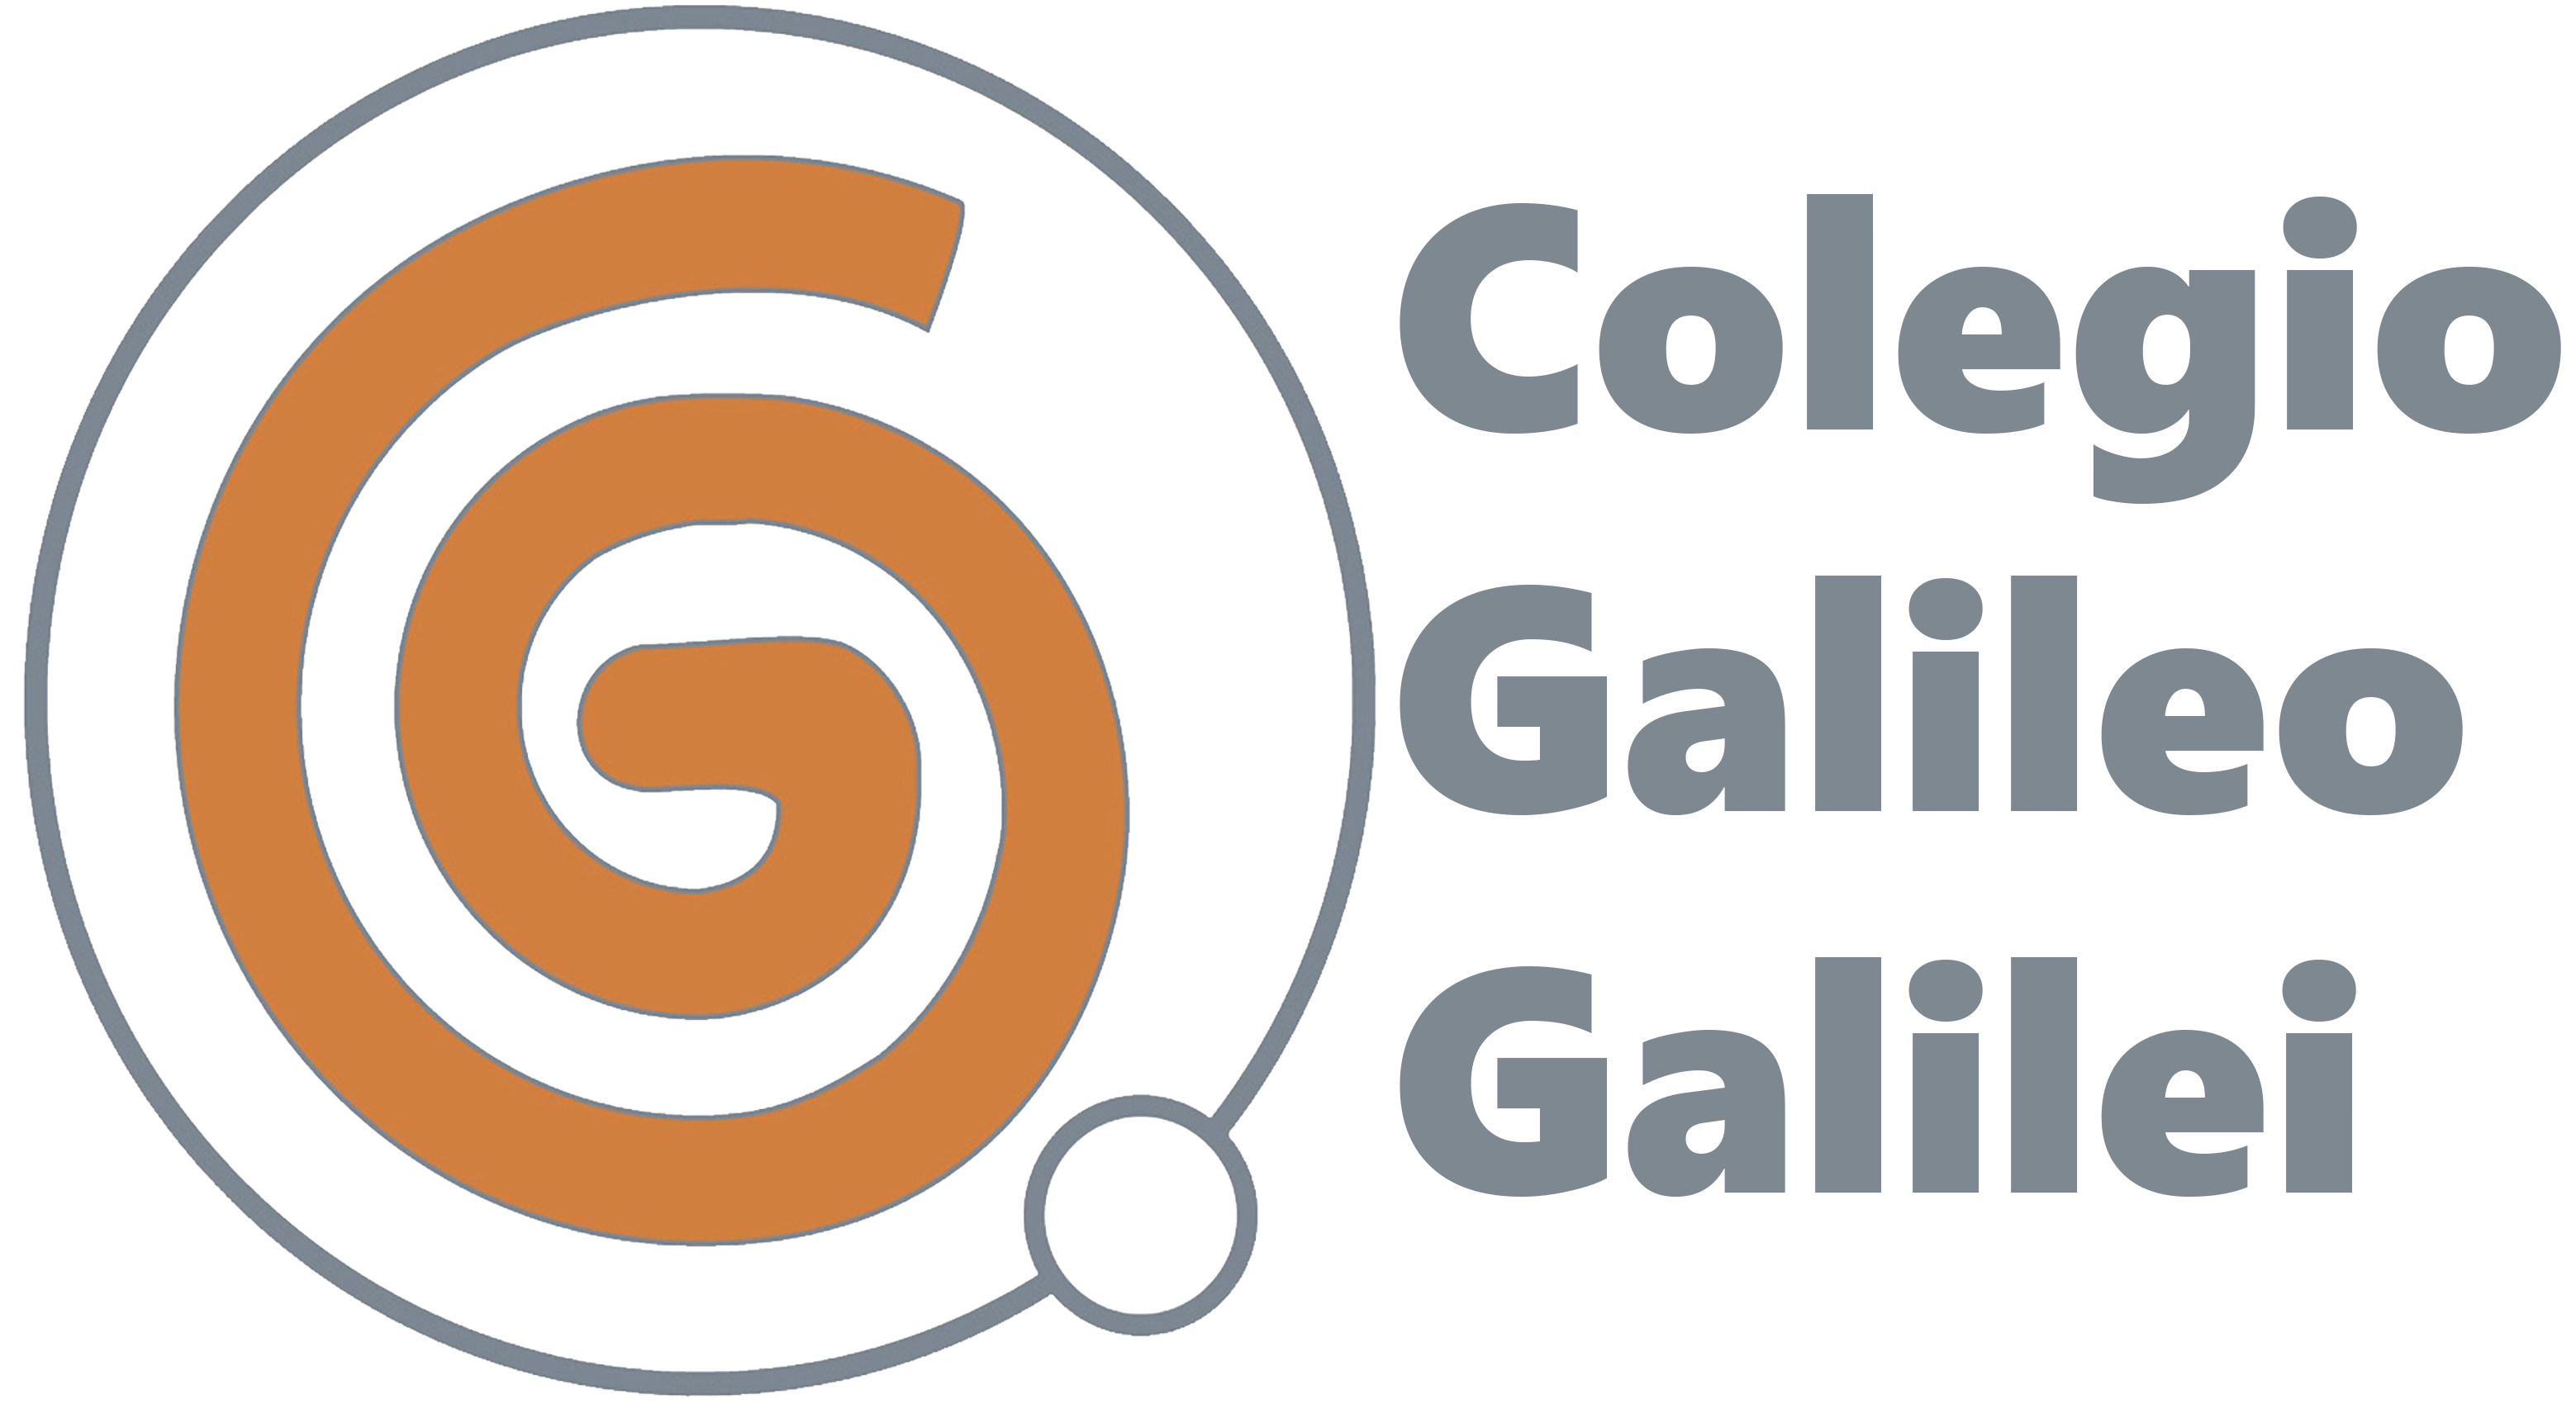 COLEGIO GALILEO GALILEI